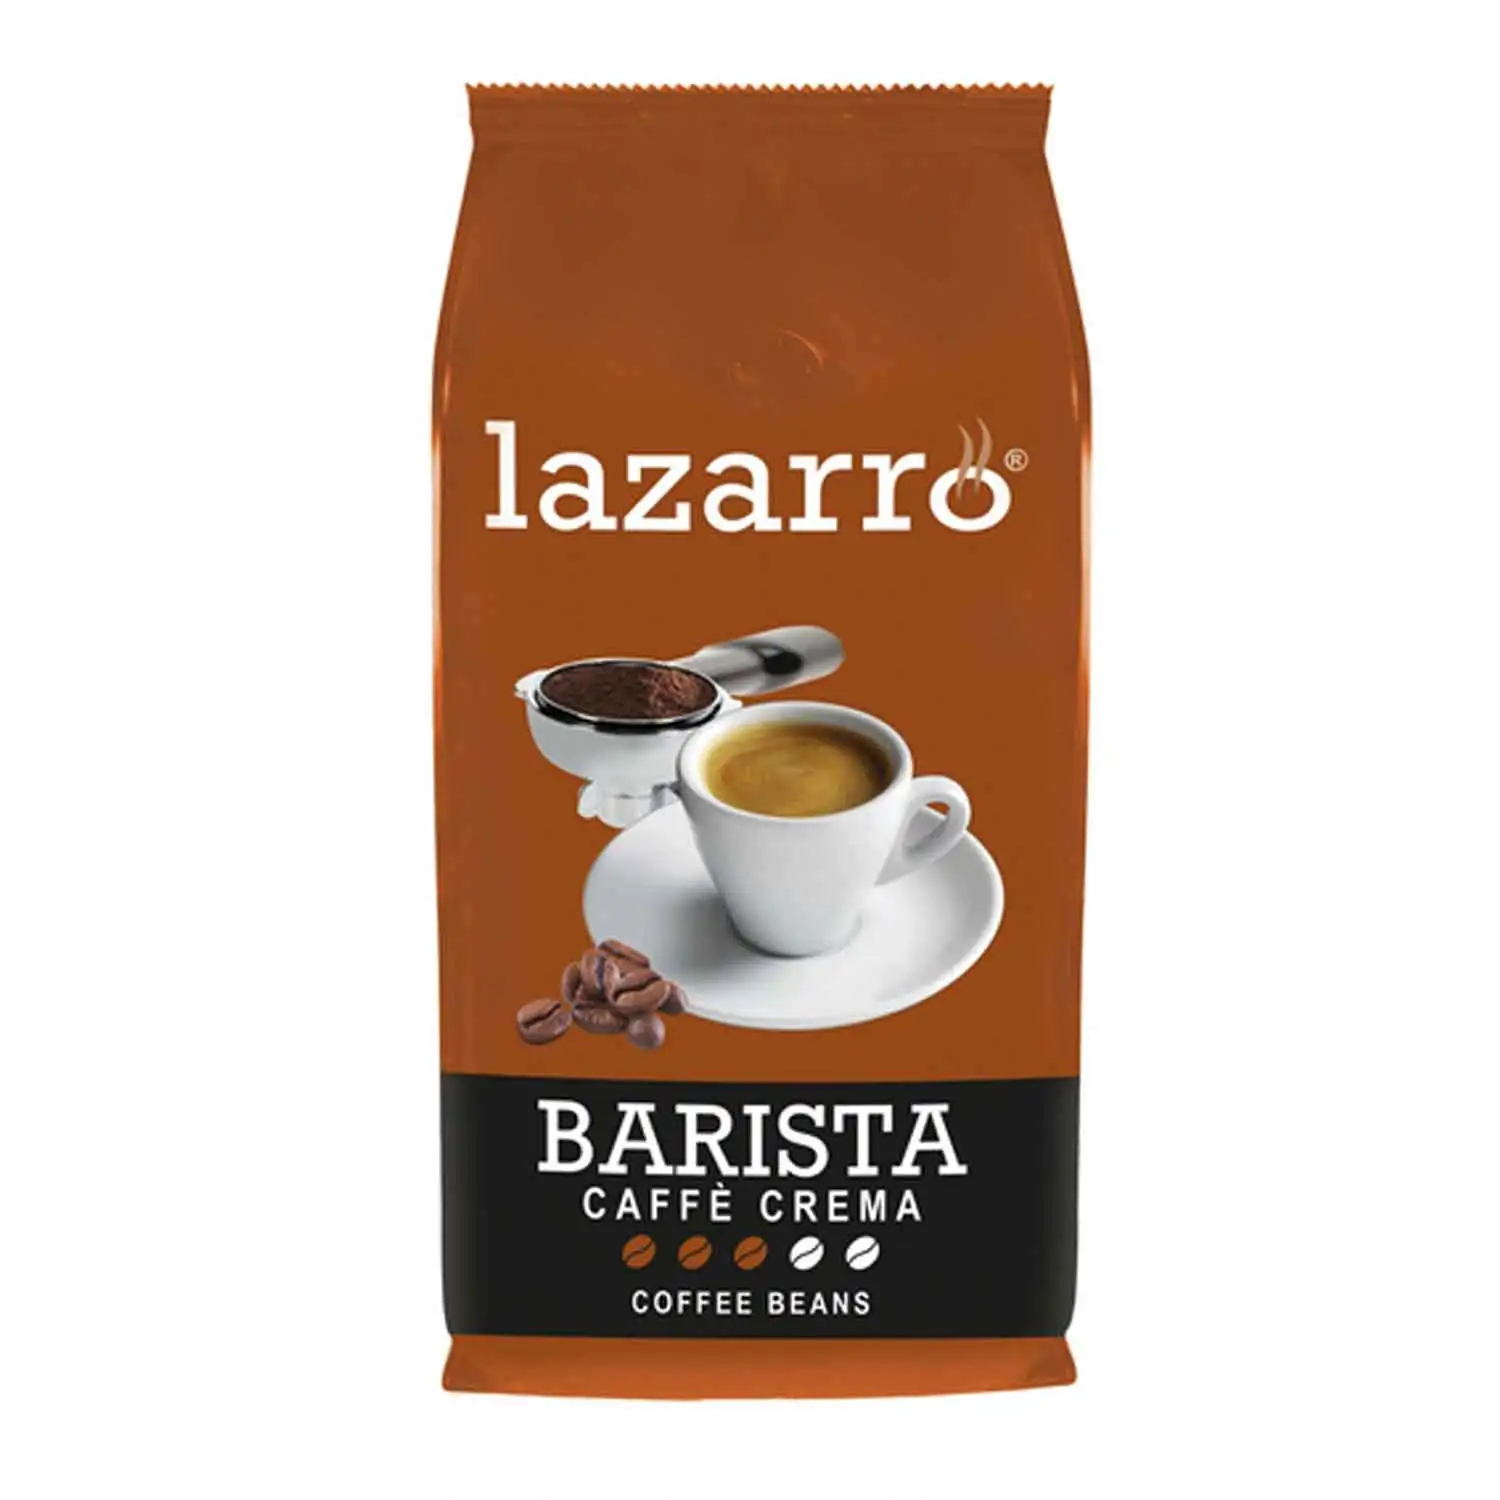 Lazarro coffee beans barista 1kg